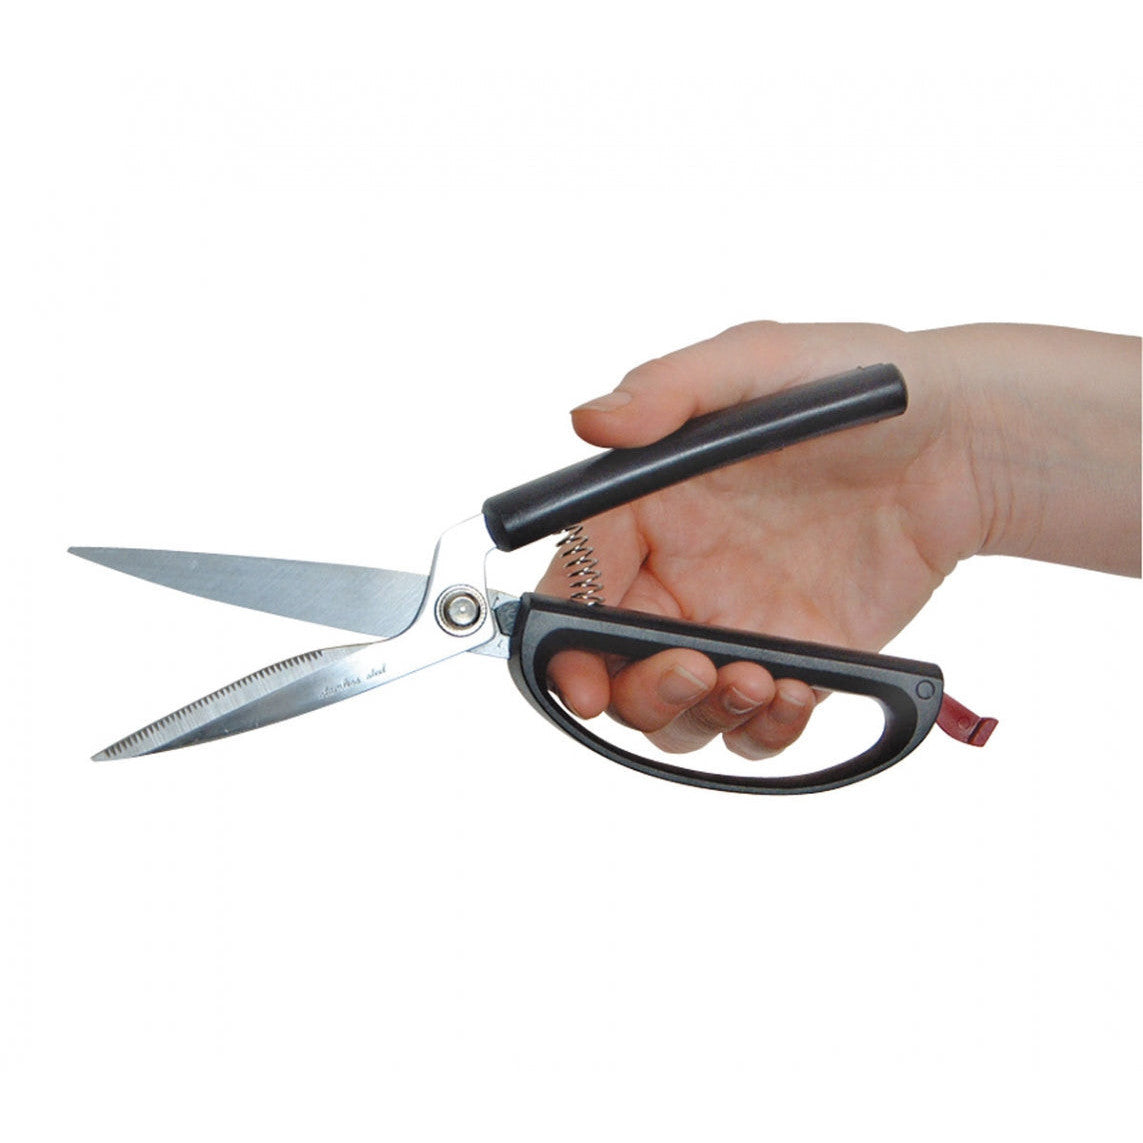 Self-opening kitchen scissors